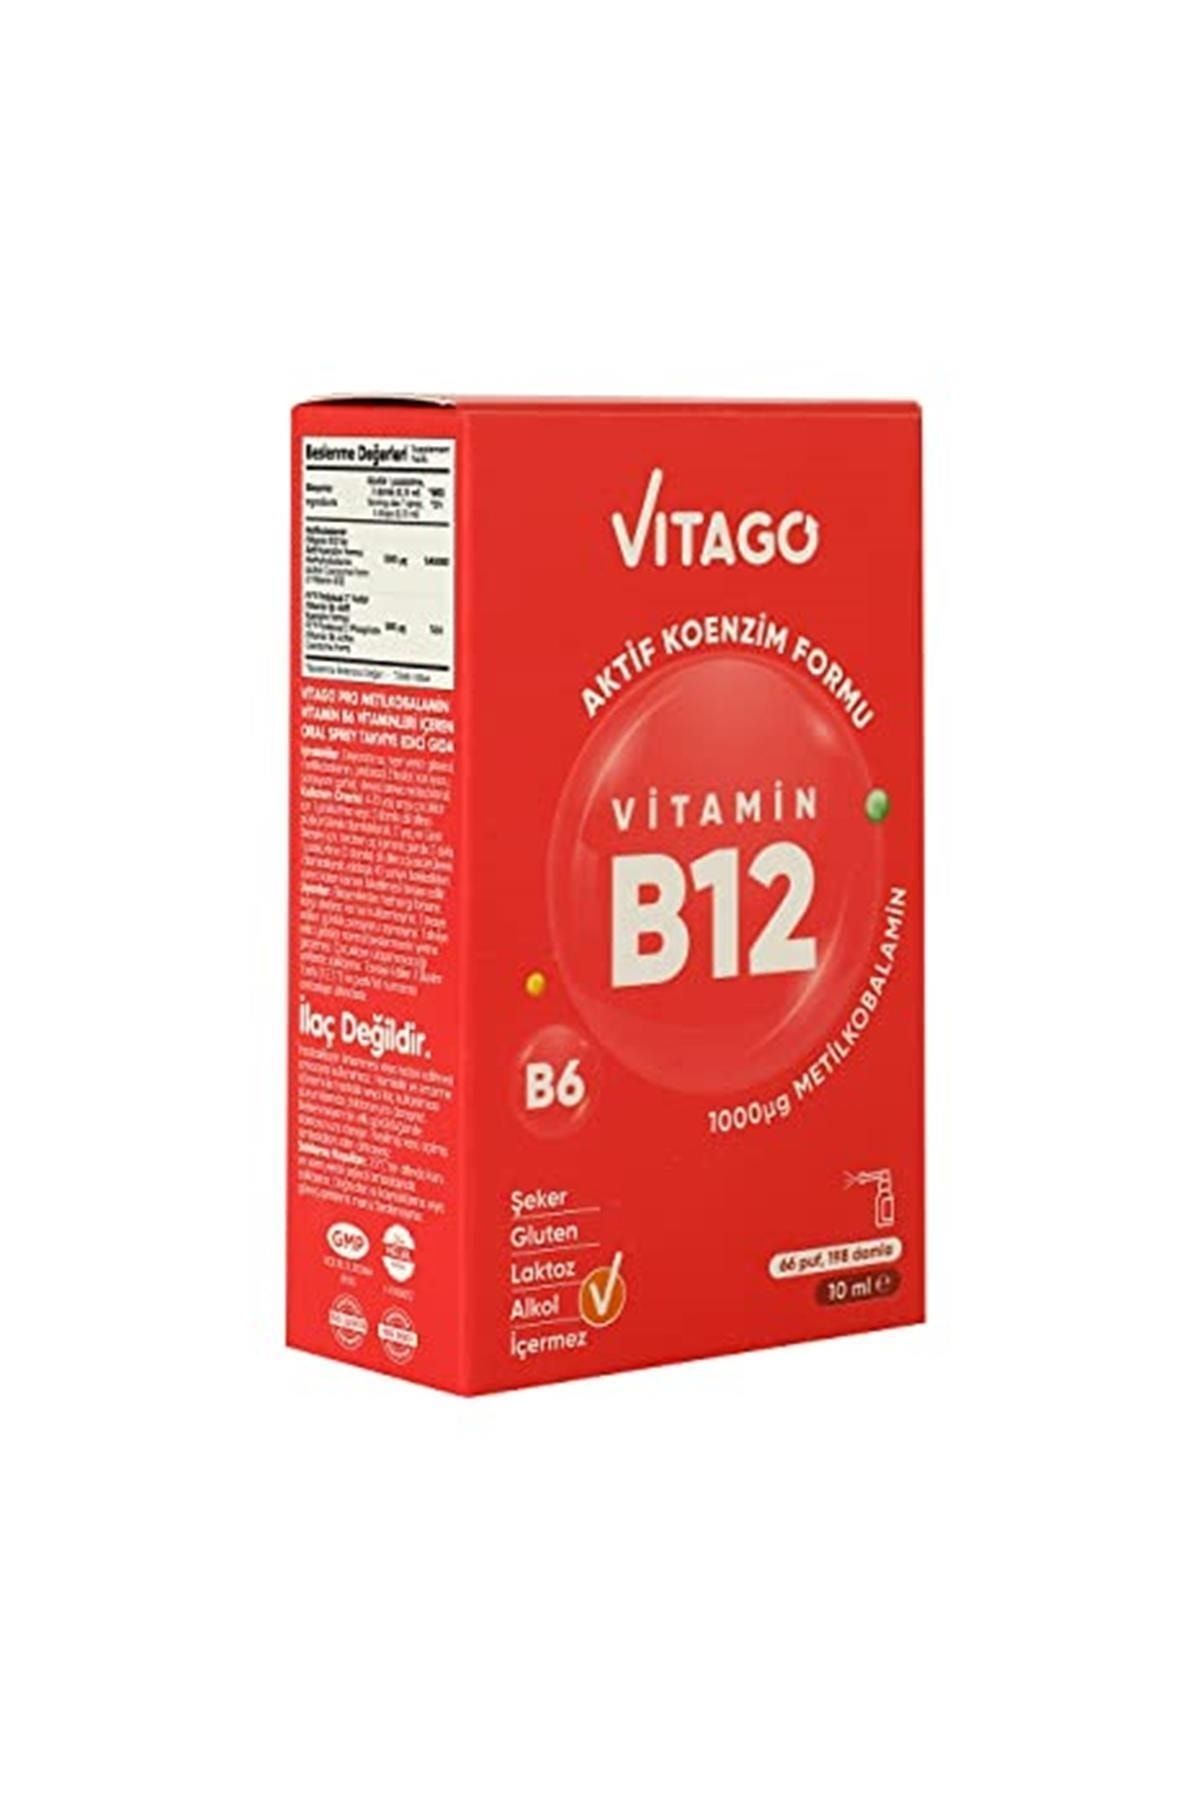 Vitago B12 Vitamini Metilkobalamin, Vitamin B6 Içeren 10 Ml Sprey